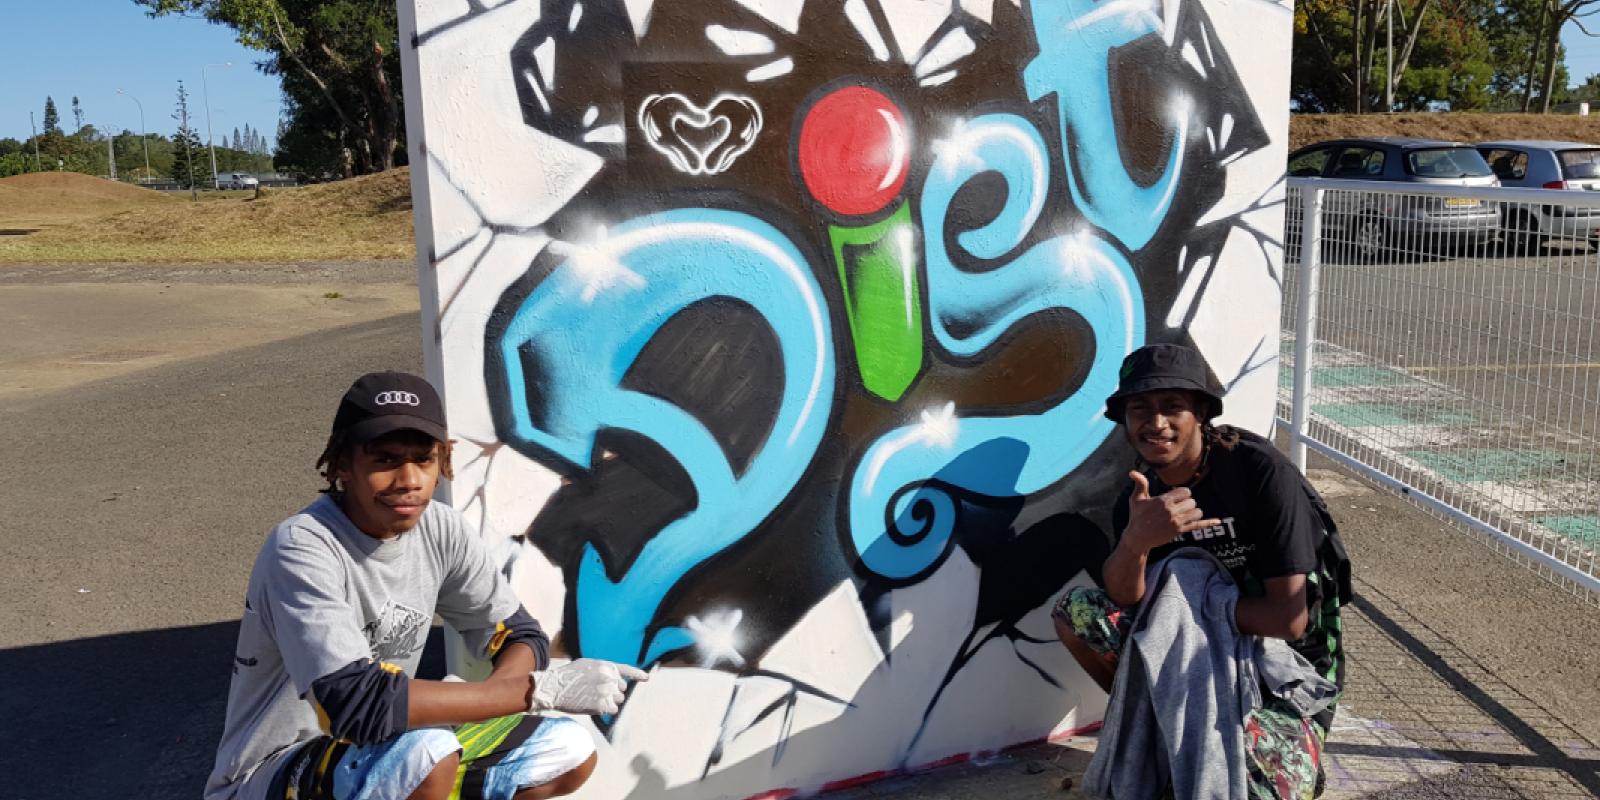 Graff battle at Dumbea skate park (thanks to Dumbea city) - team Vanuatu